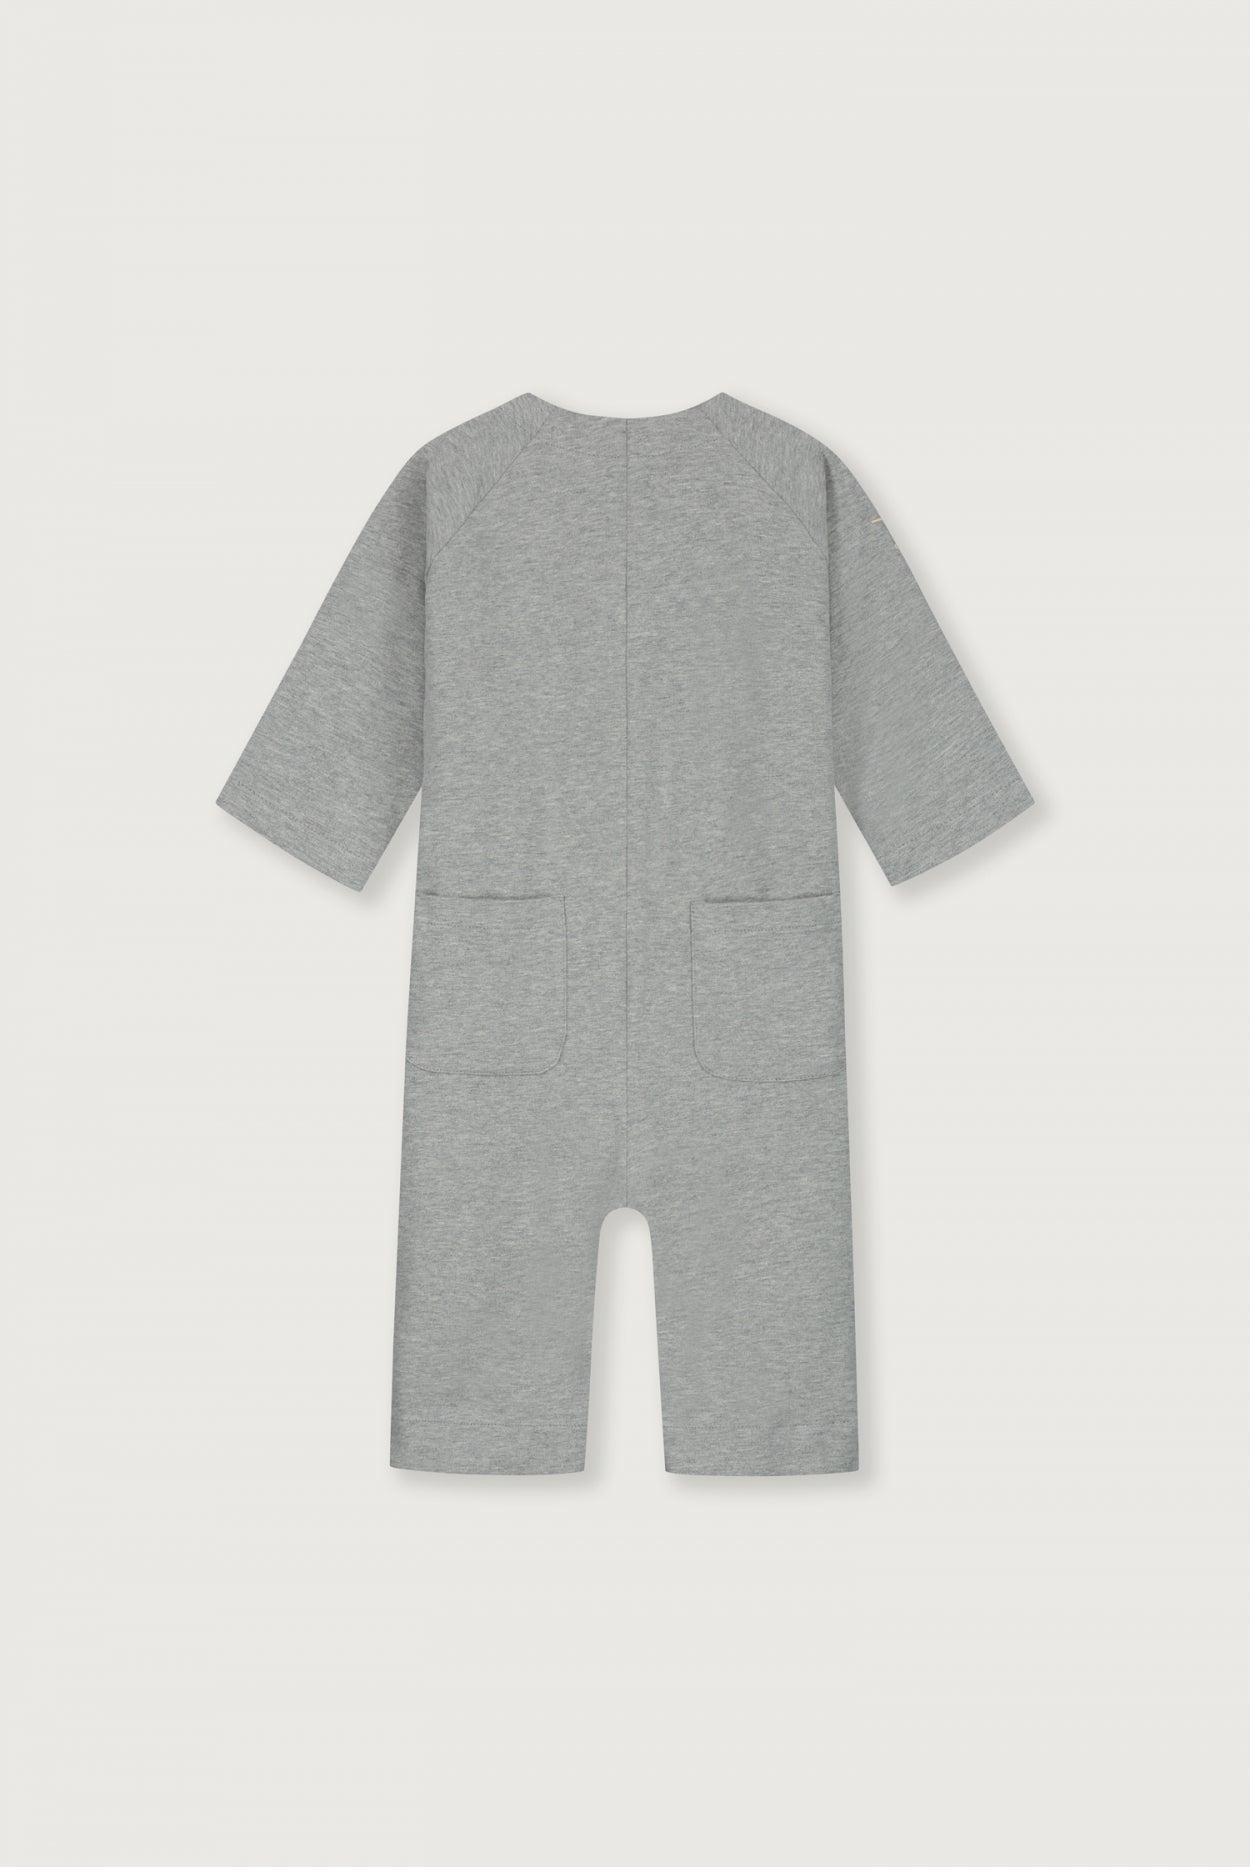 Baby Overall Grey Melange